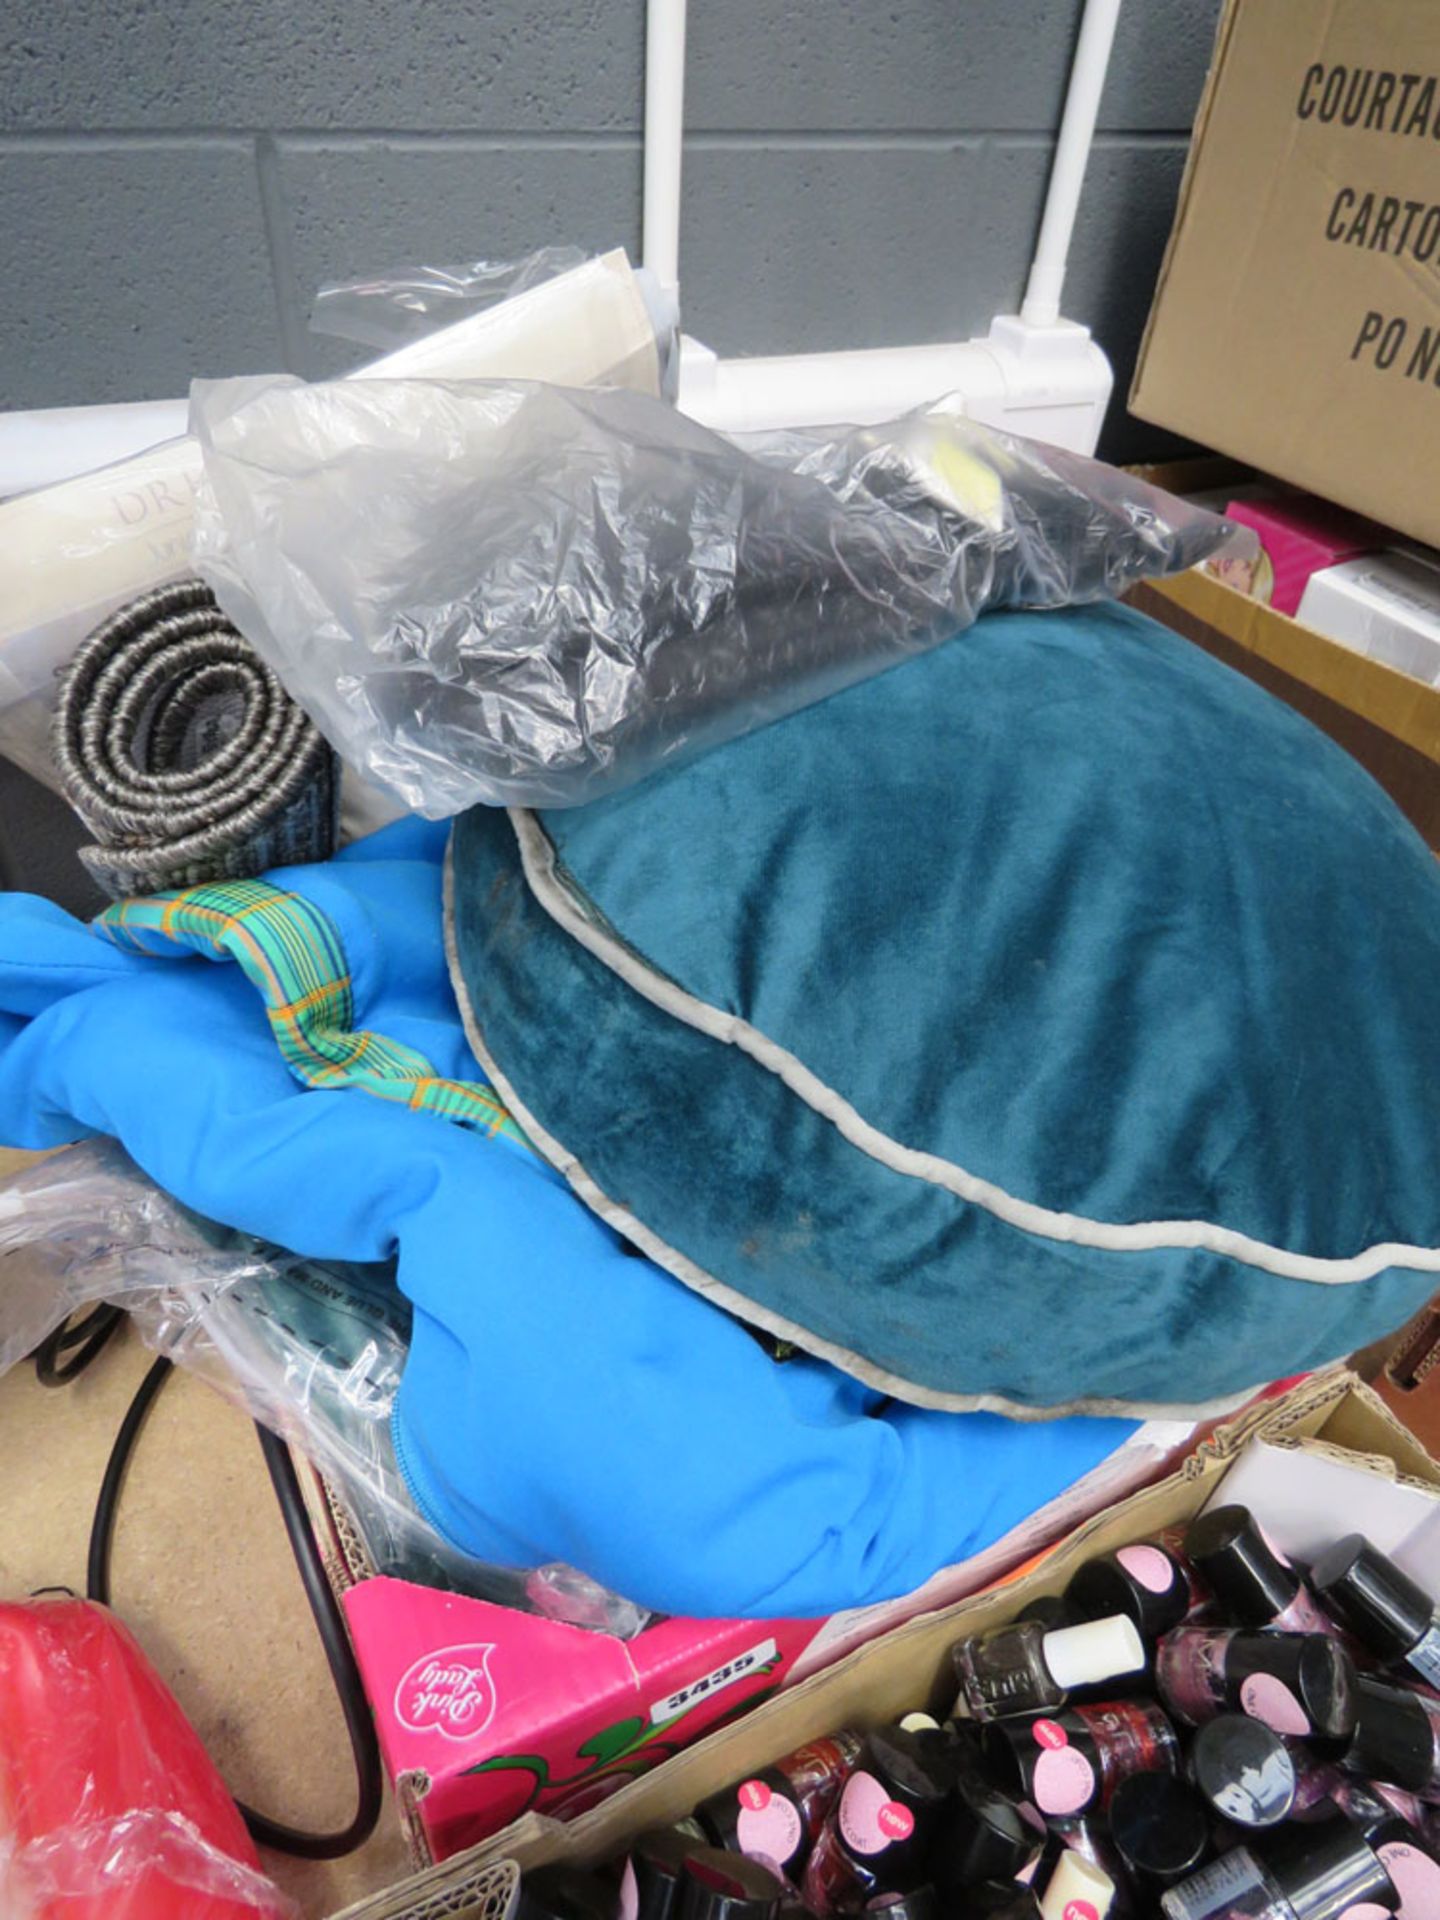 Tray containing pillows, mat etc.